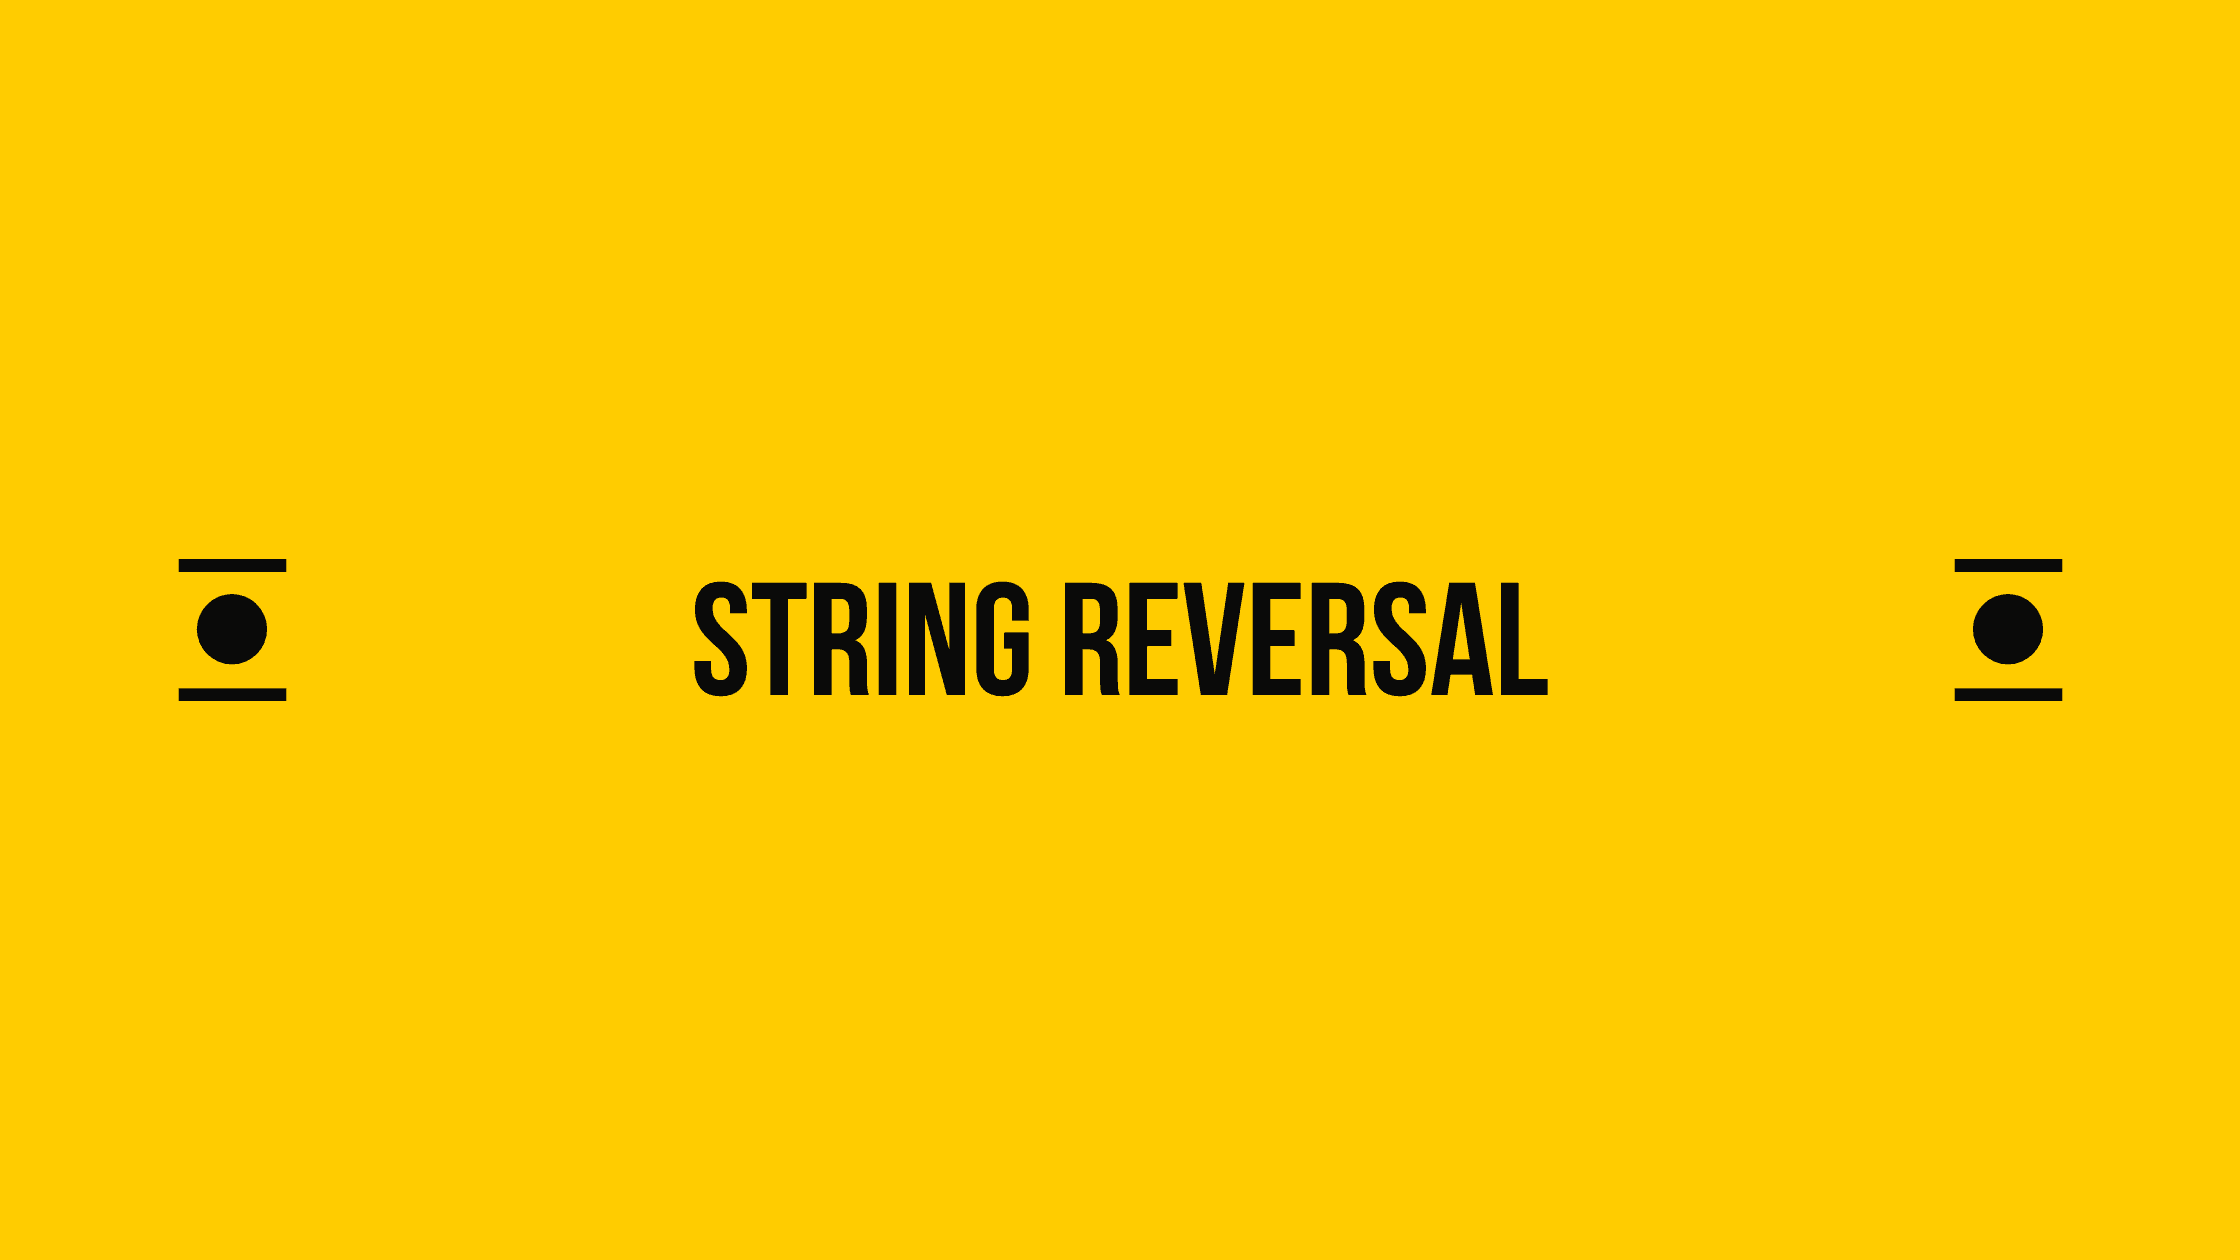 String reversal in Javascript